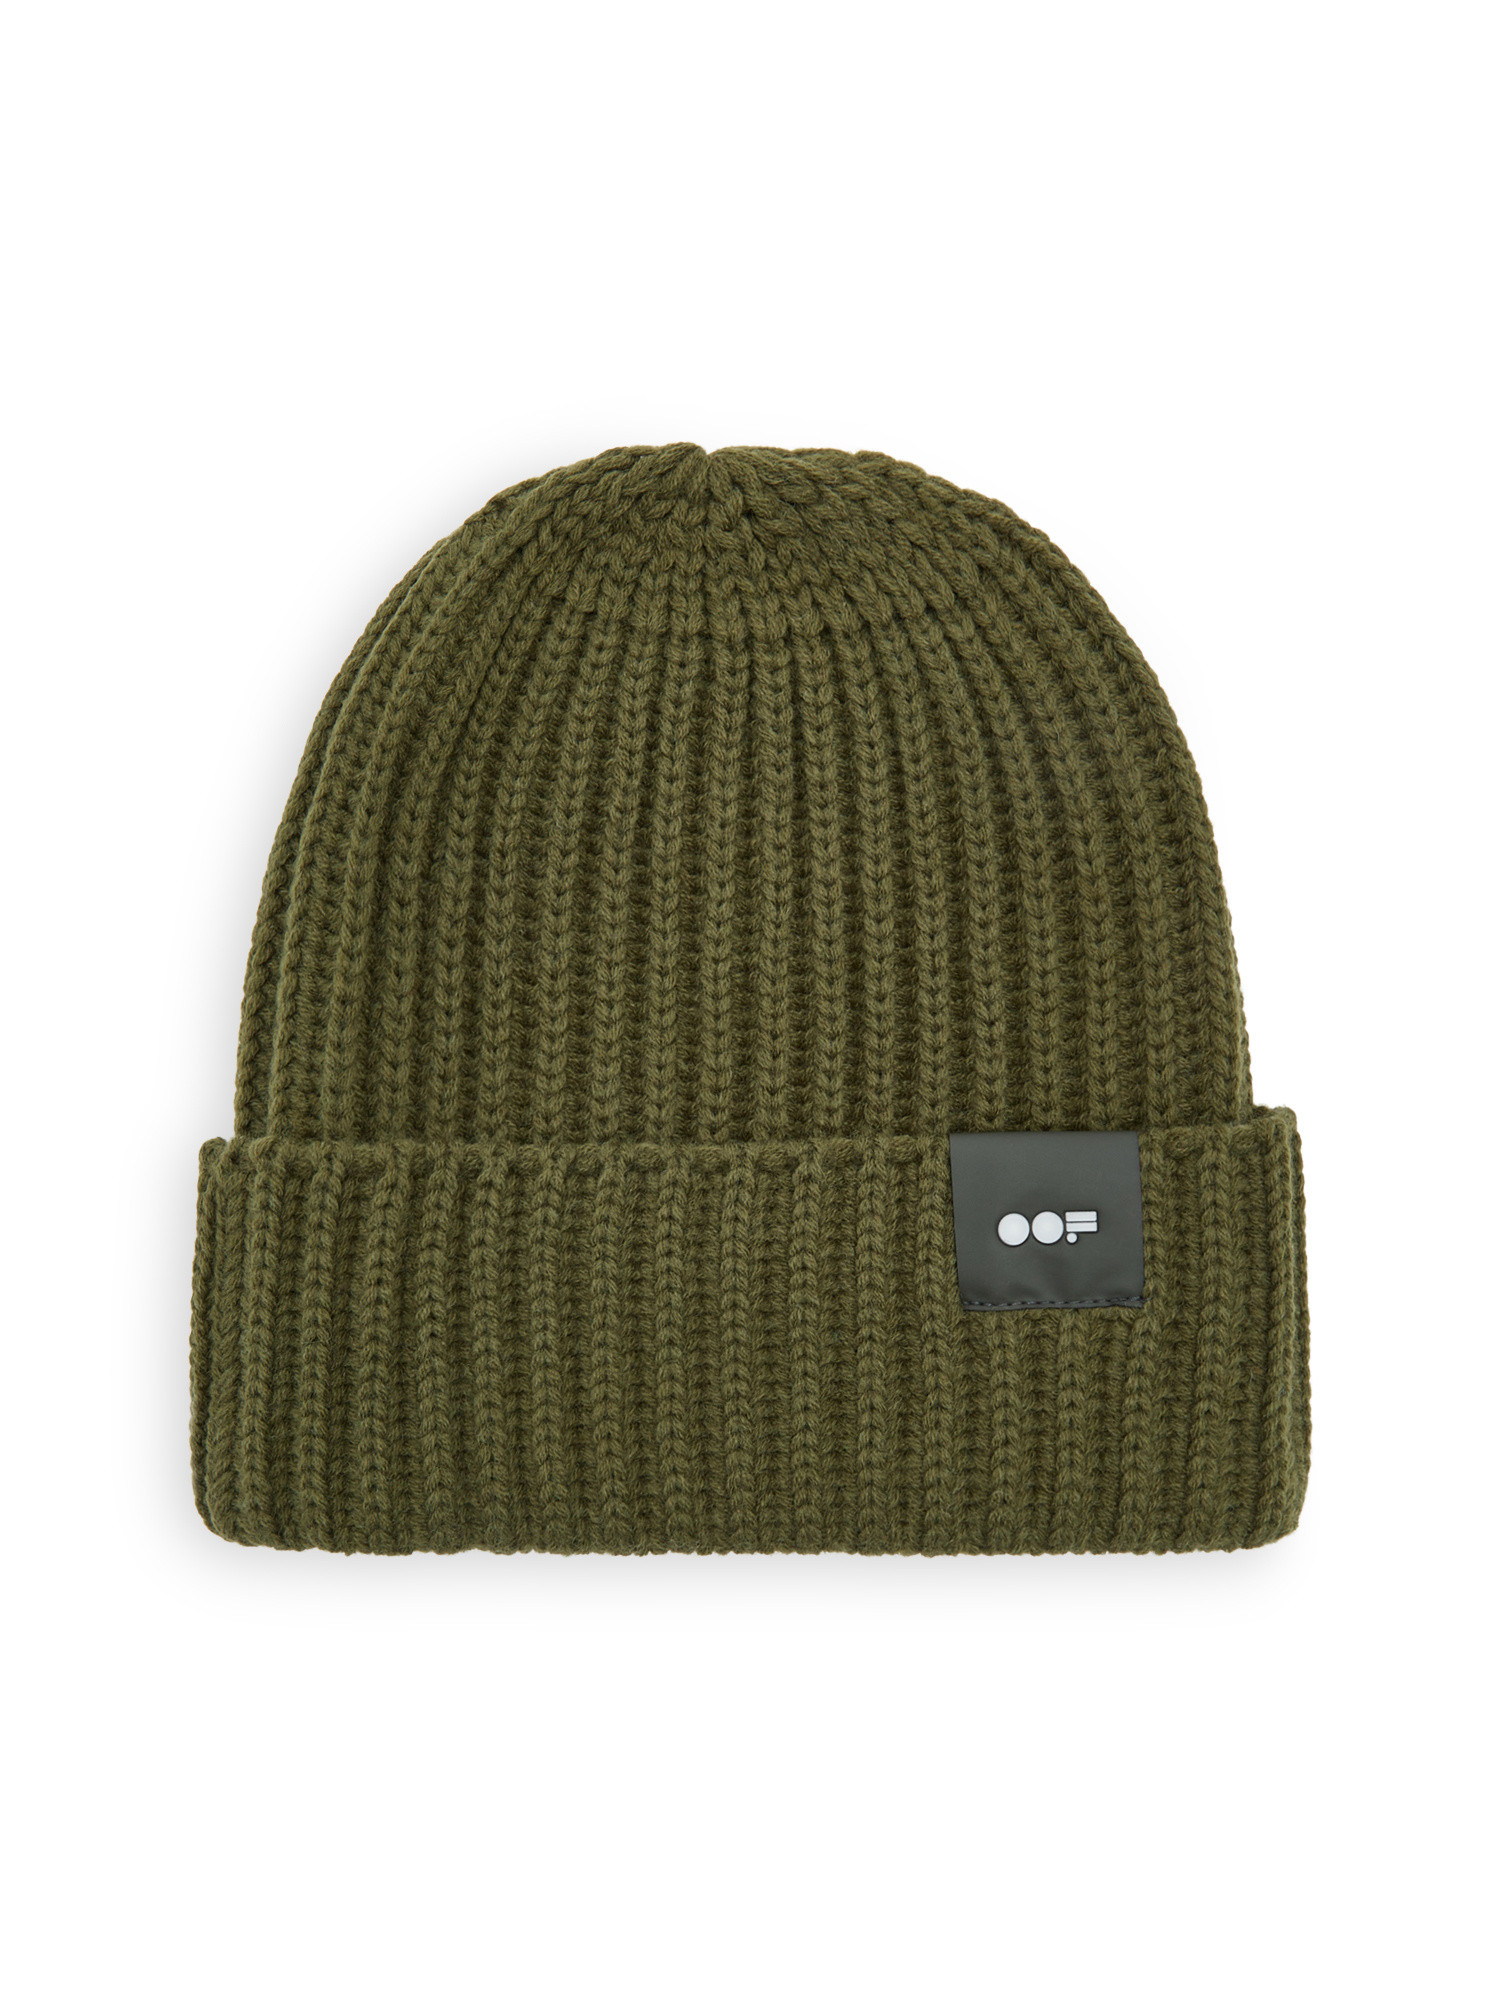 Oof Wear - Wool blend hat, Green, large image number 0